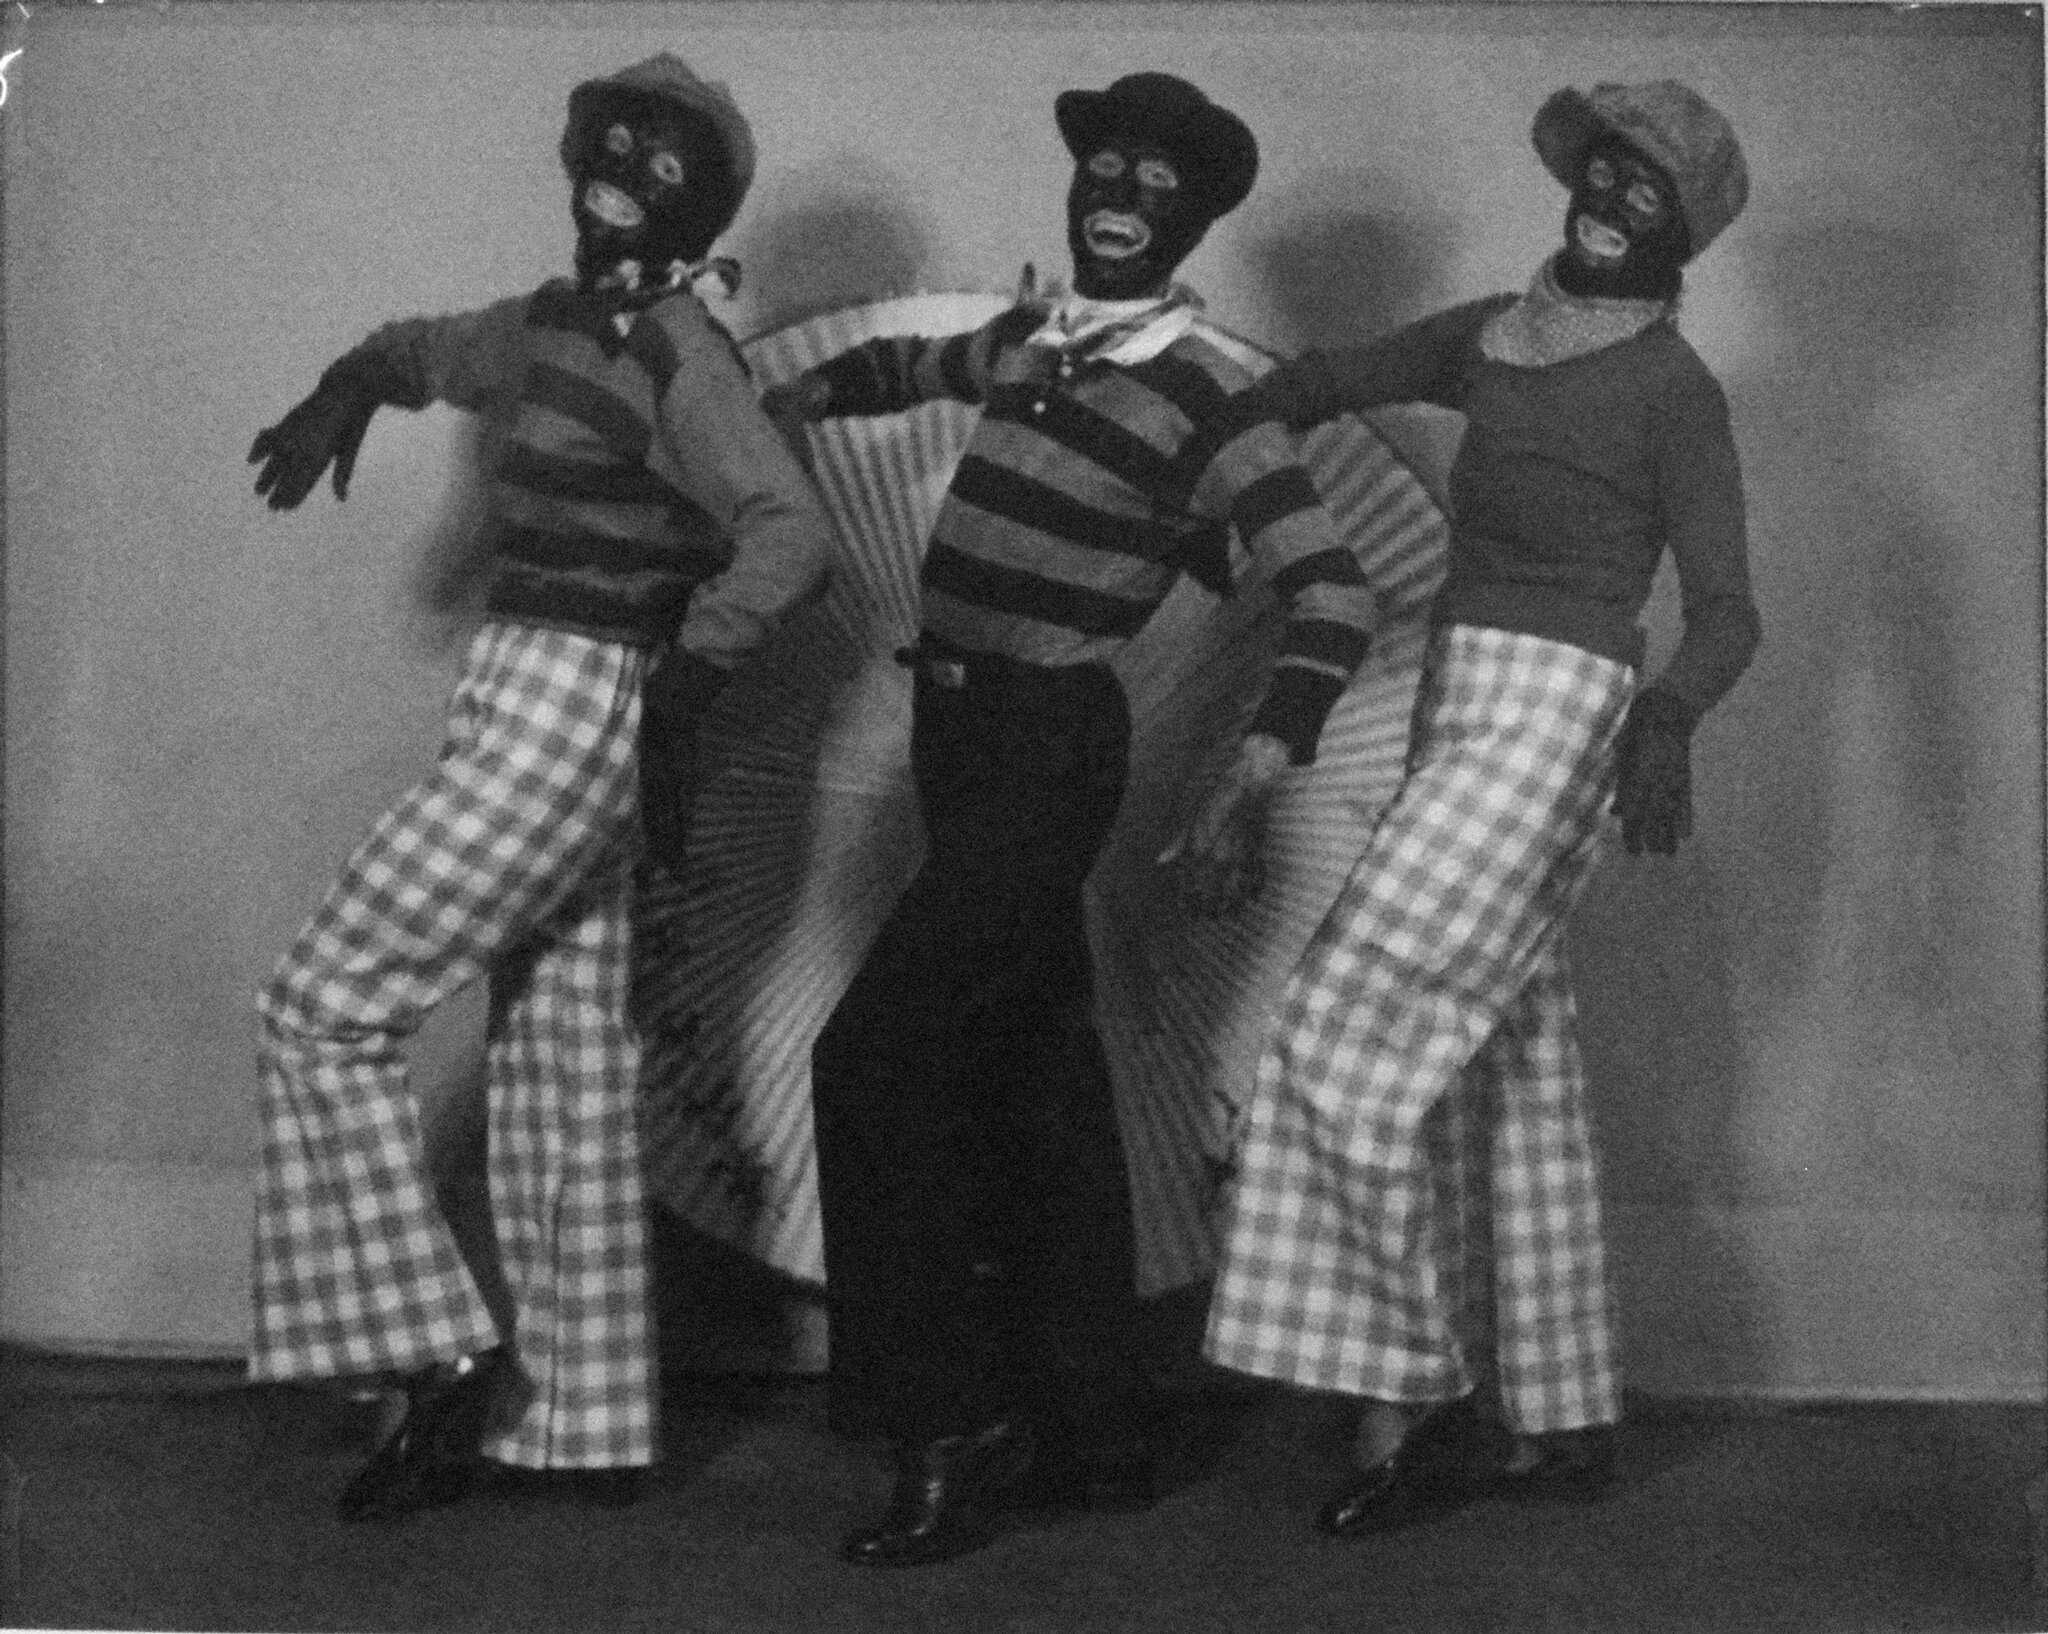 Florence Clough dancers in blackface